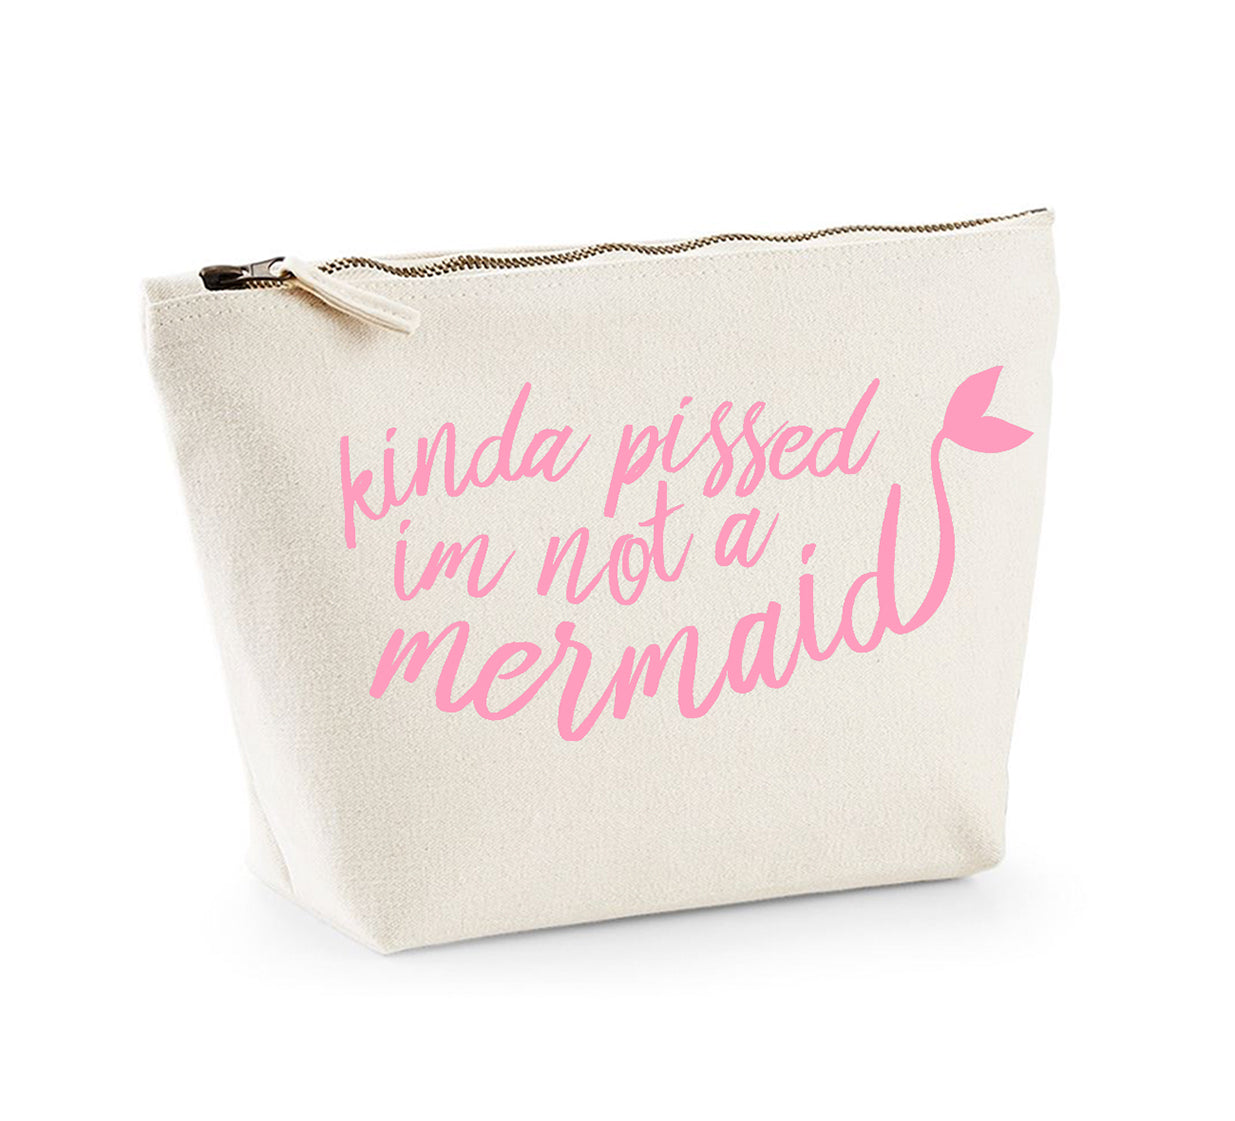 Kinda Pissed I'm Not a Mermaid - Make Up/Cosmetics Bag